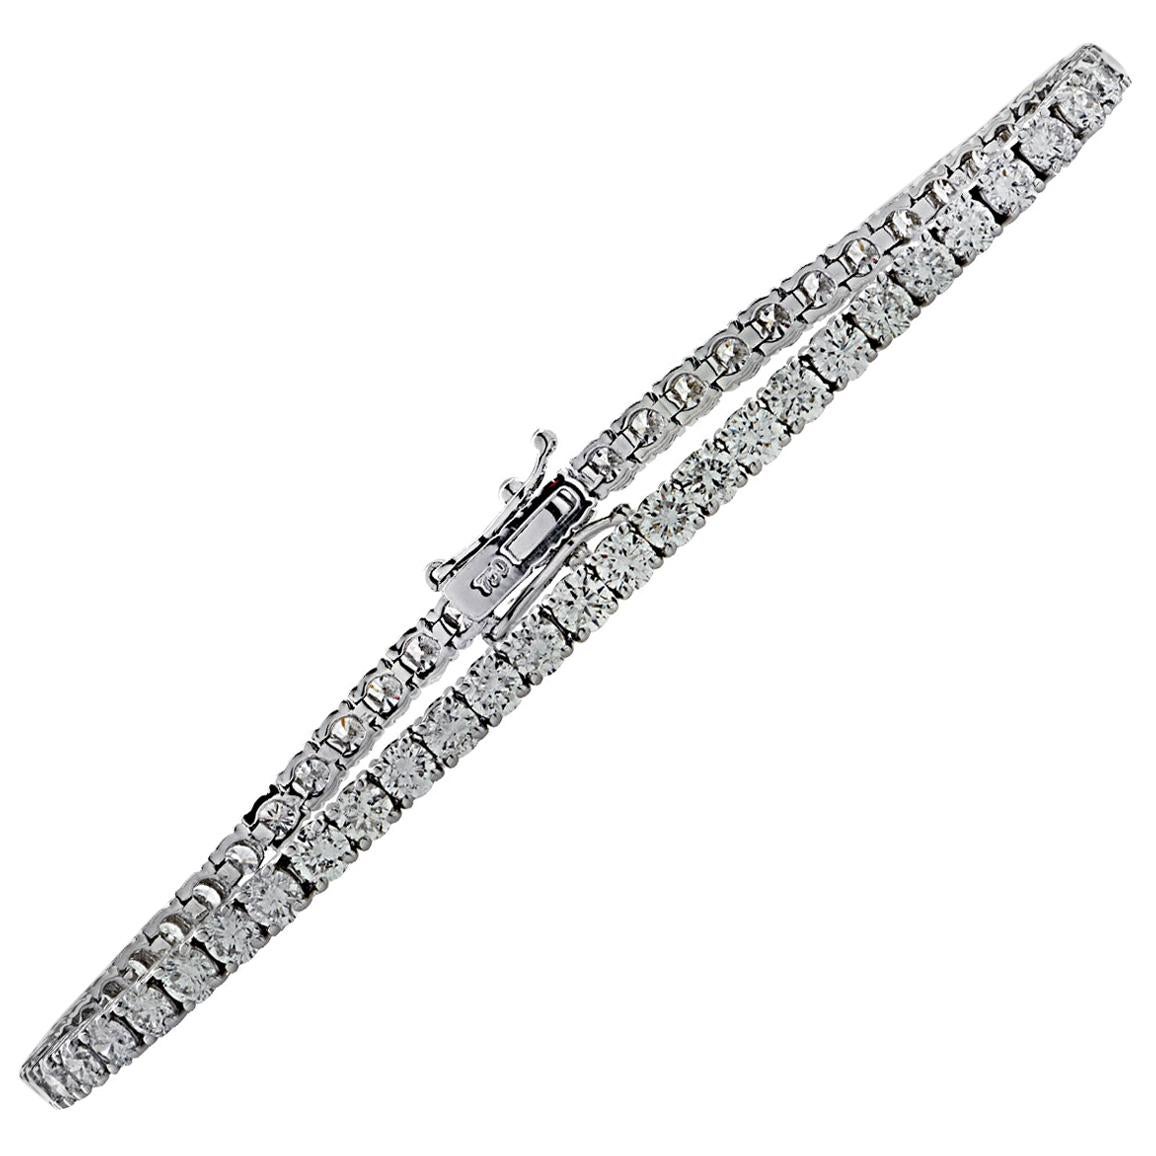 Vivid Diamonds 3.14 Carat Diamond Tennis Bracelet For Sale